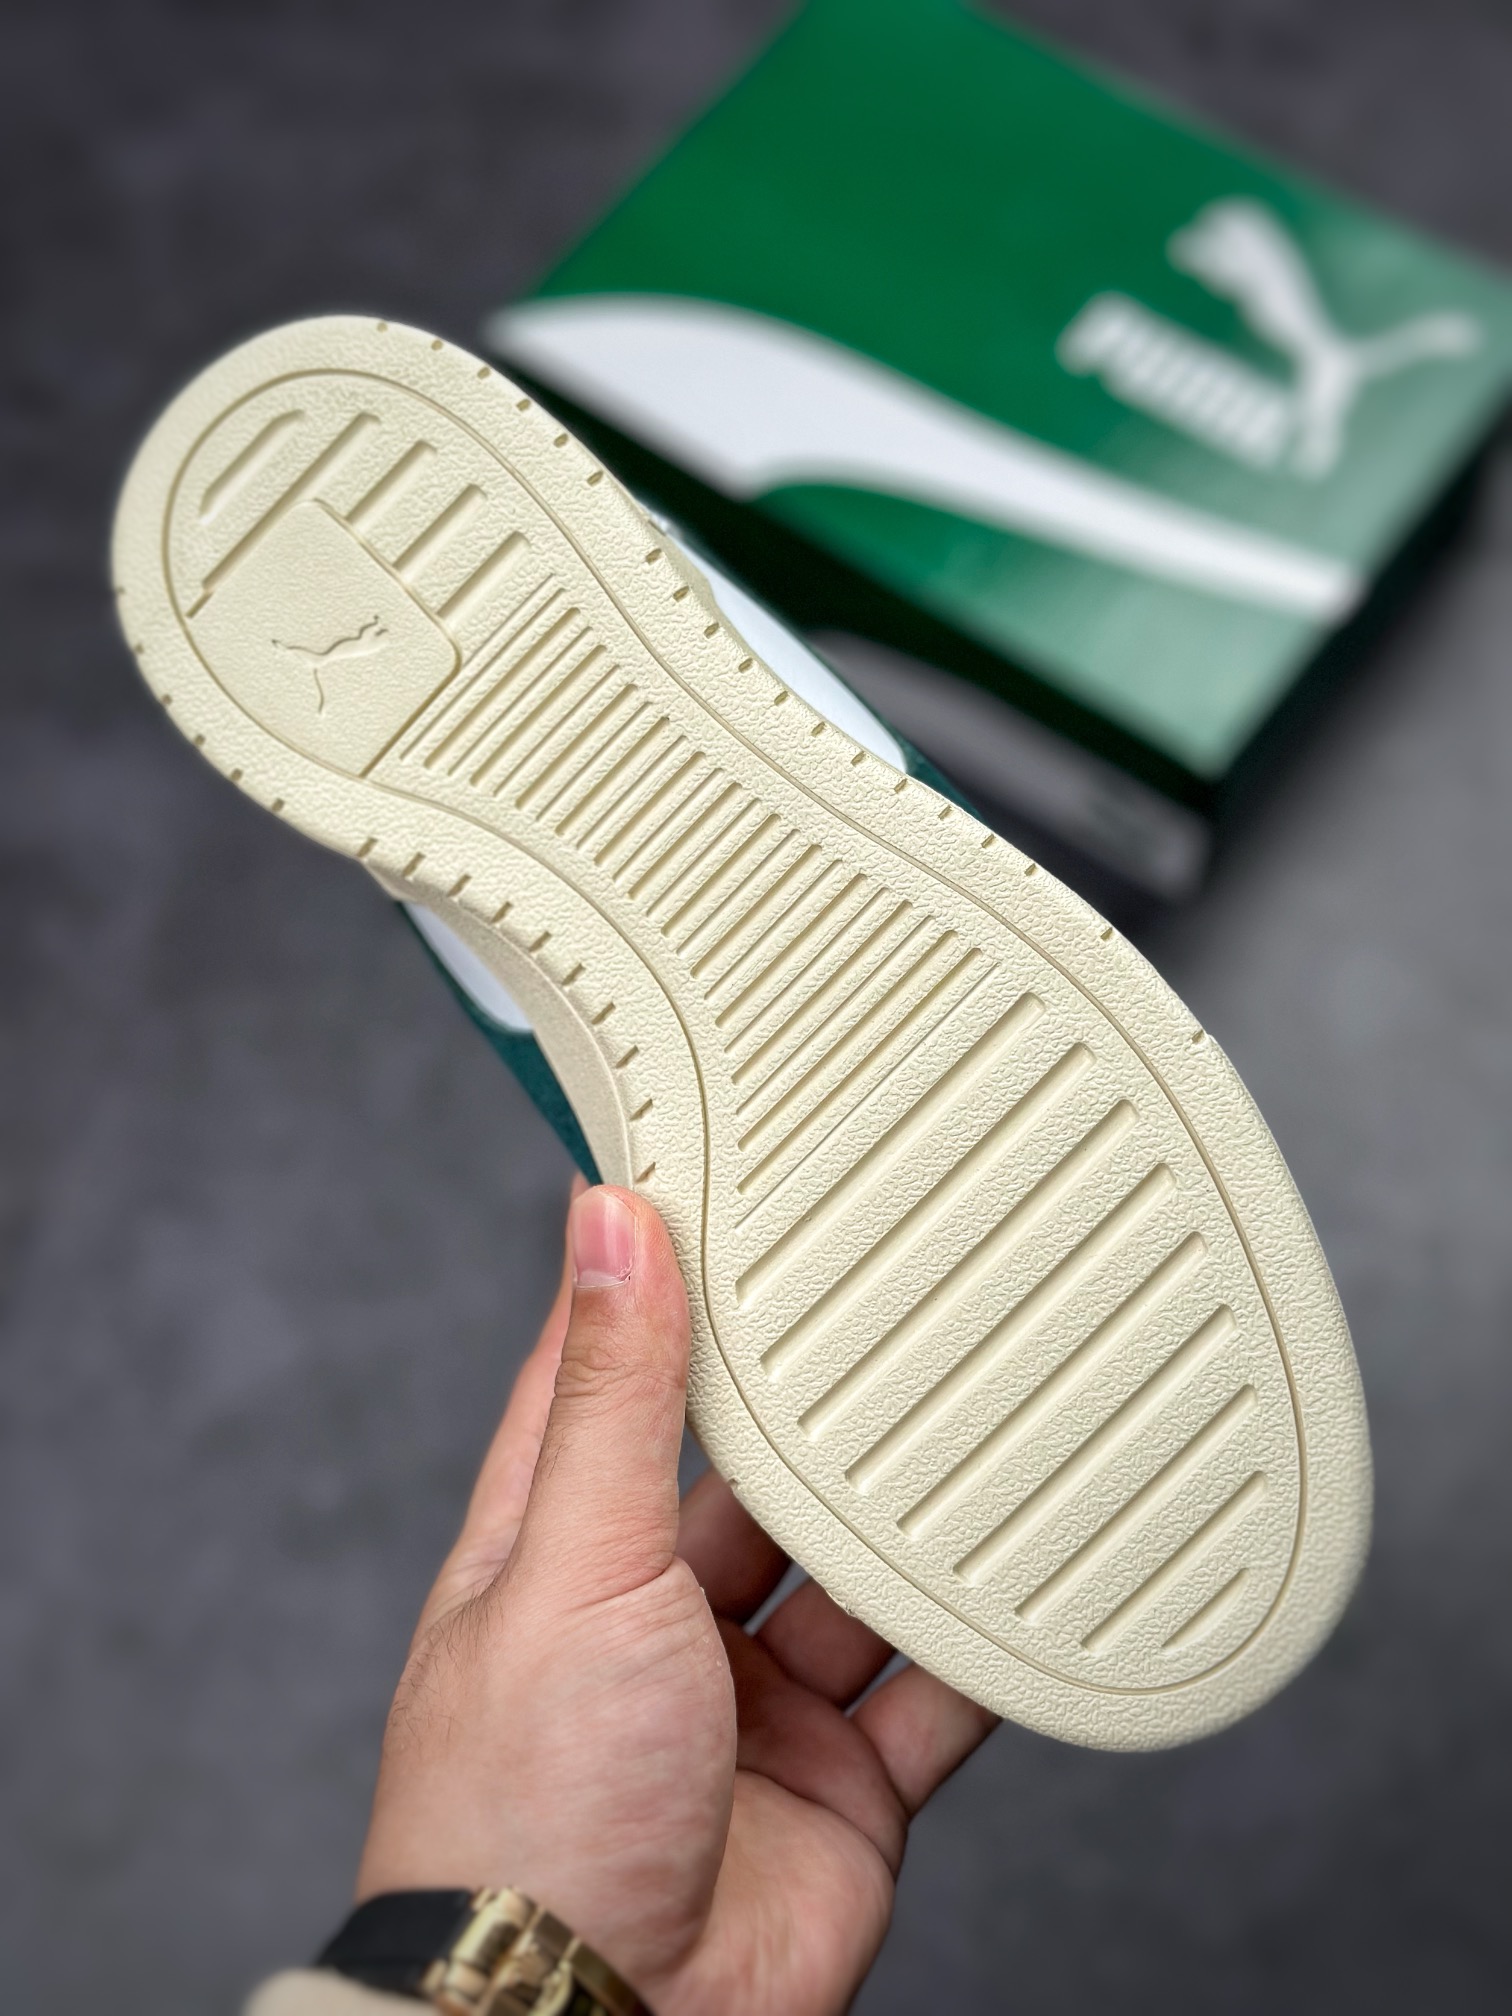 / PUMA CA Pro lvy League wear-resistant non-slip low top casual sneakers 388556-01